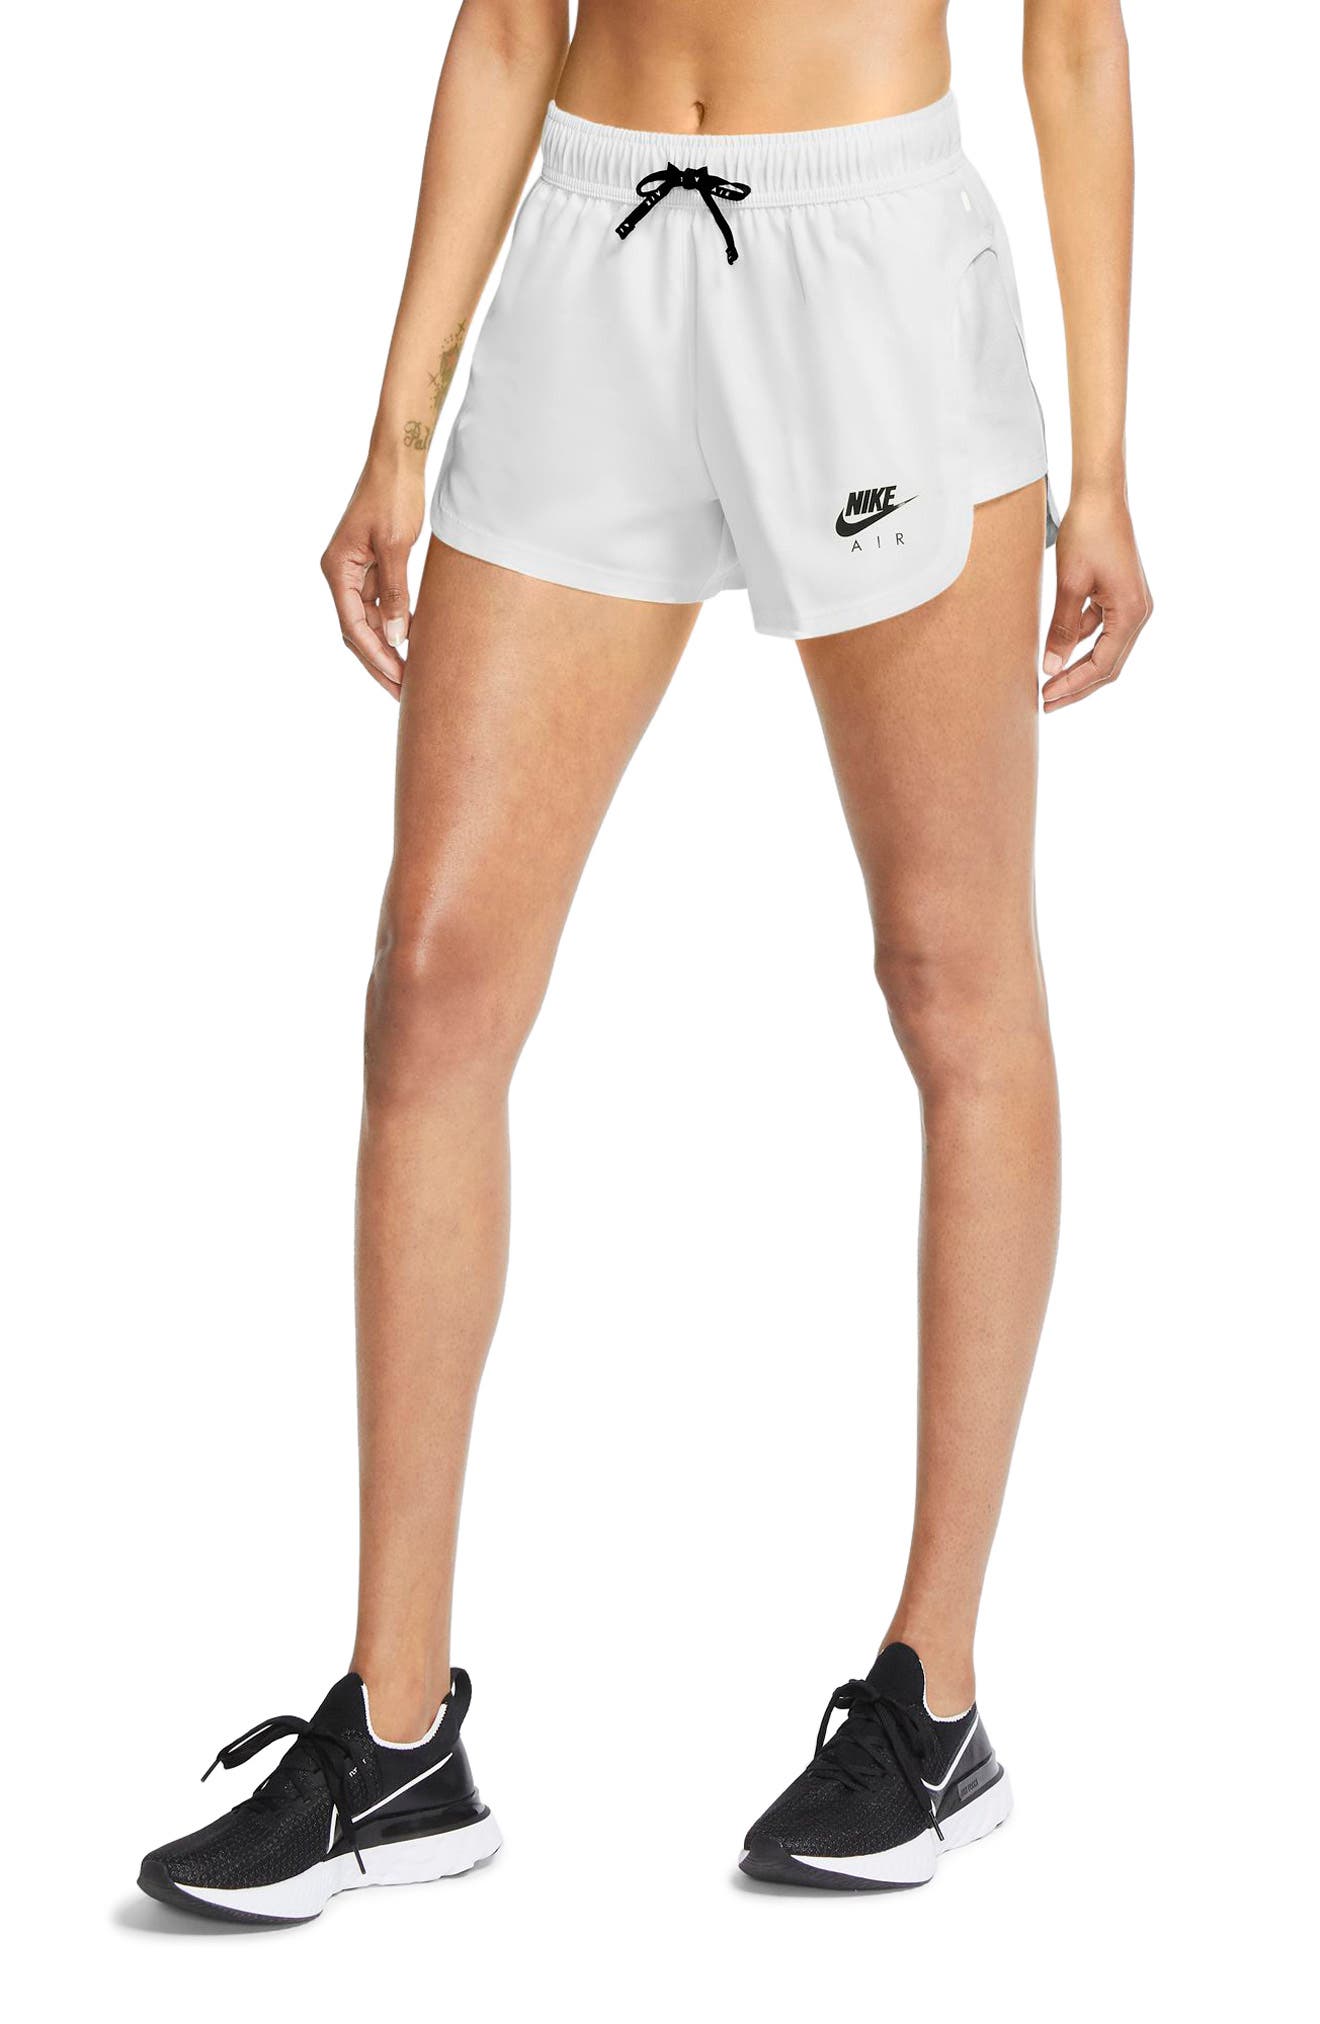 nike womens shorts on sale